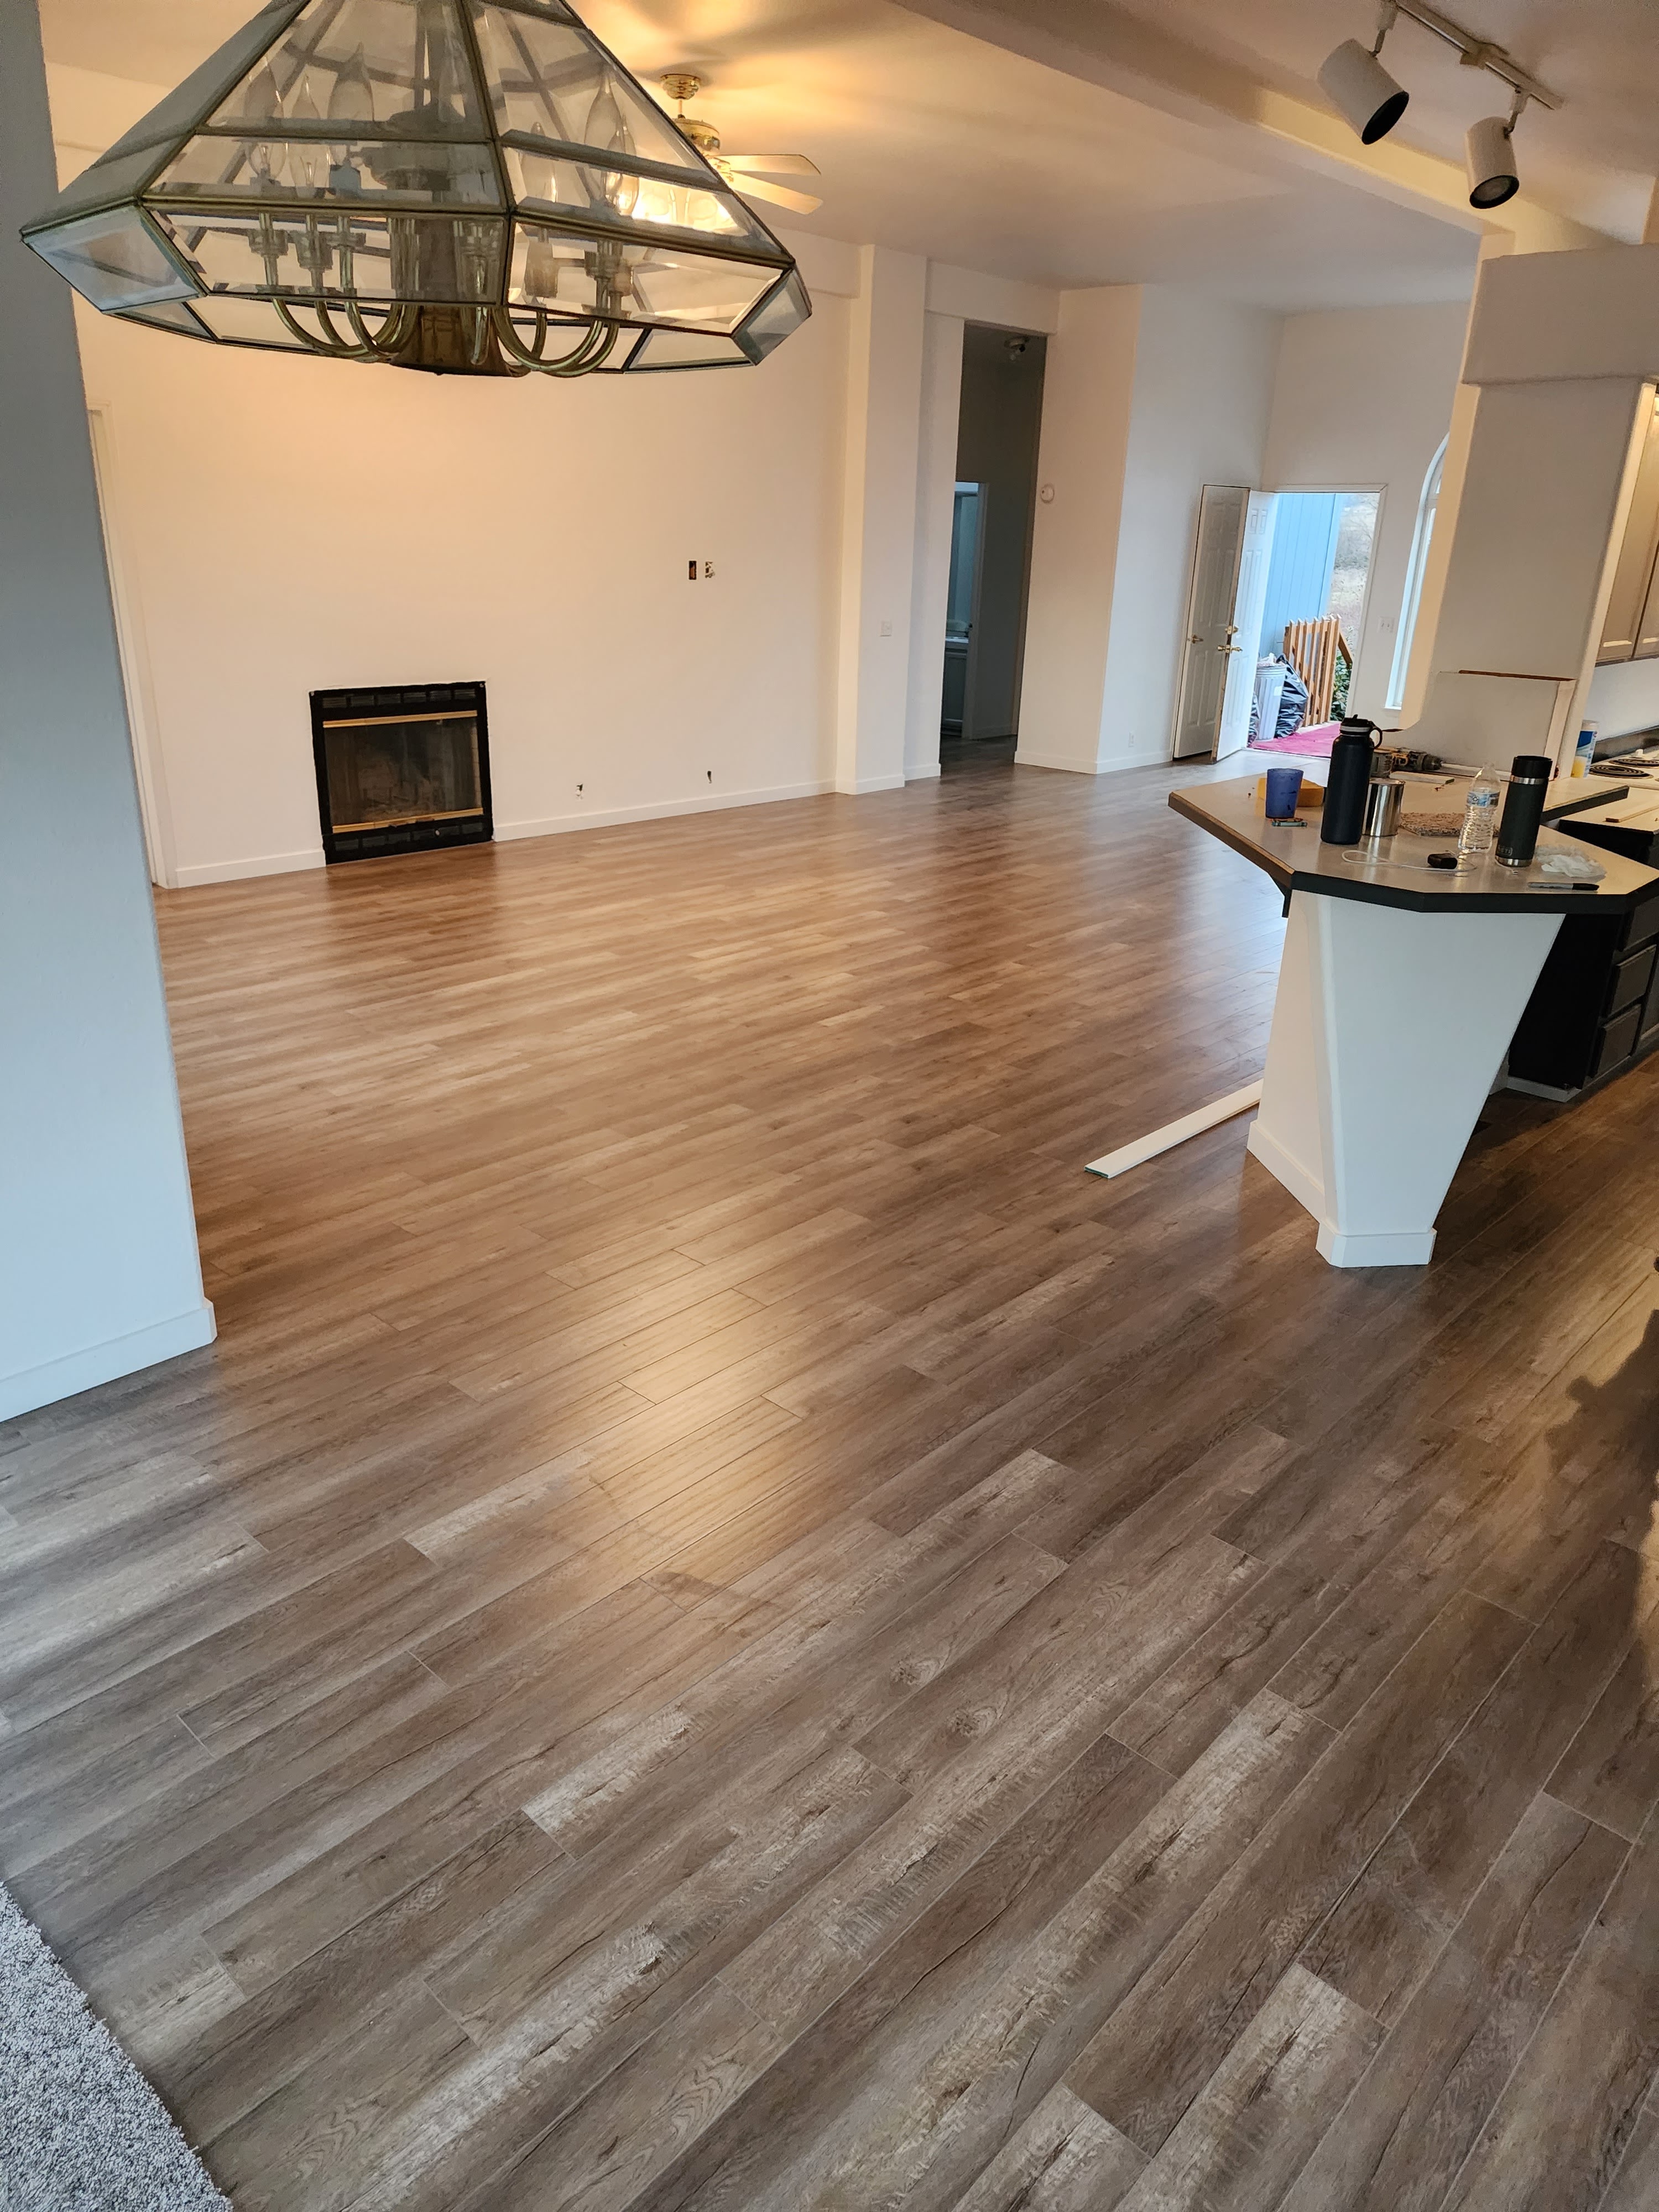 Oregon Floor Works provides the highest quality residential flooring.